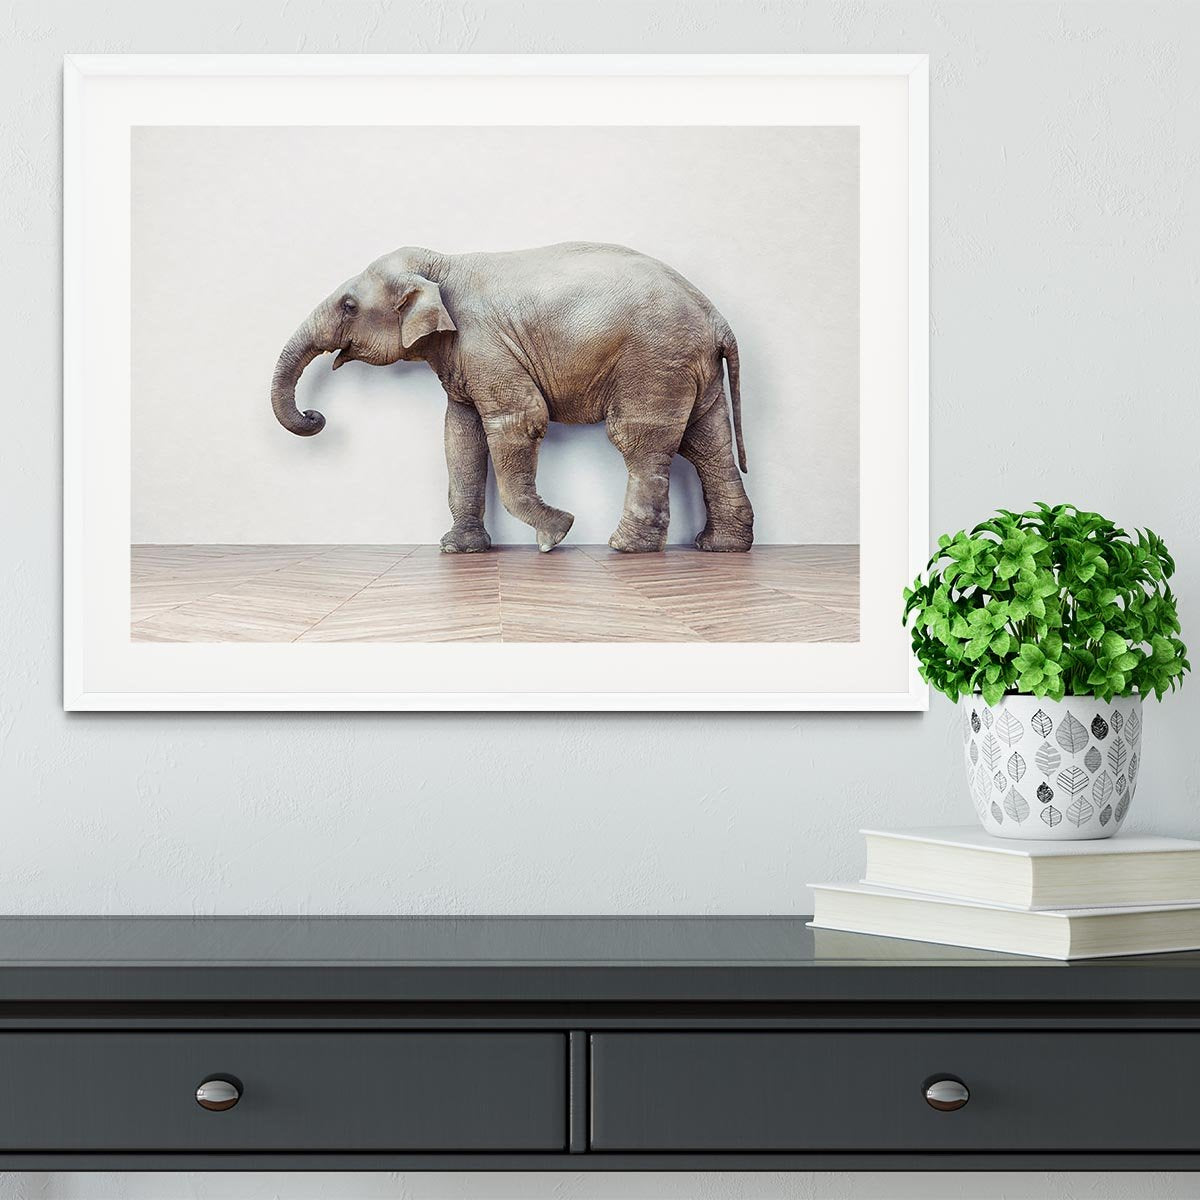 The elephant calm in the room near white wall Framed Print - Canvas Art Rocks - 5